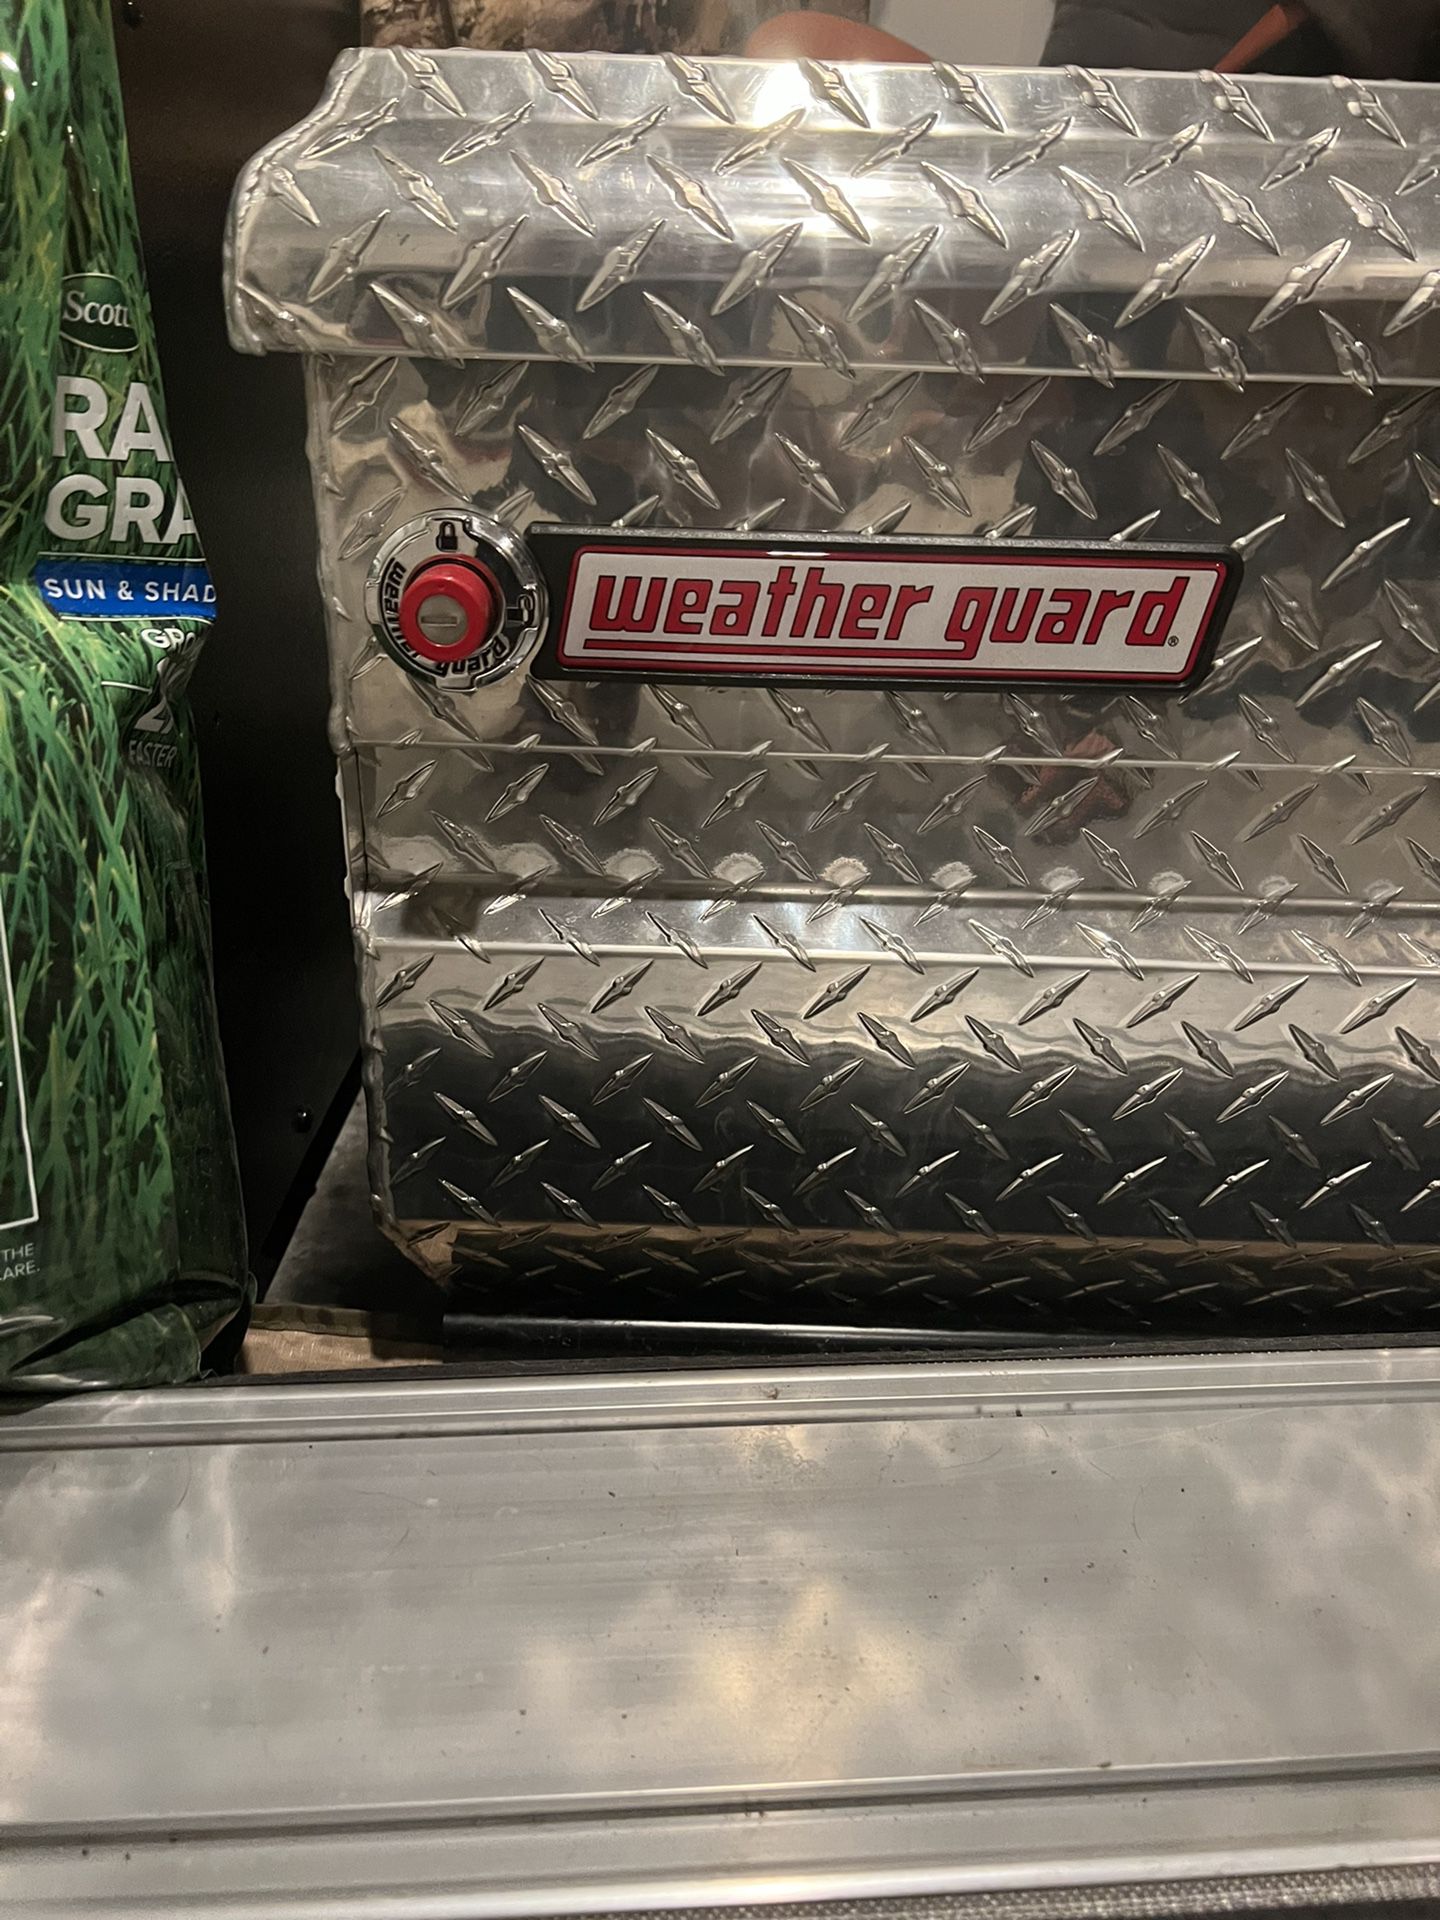 Weather Guard Box 